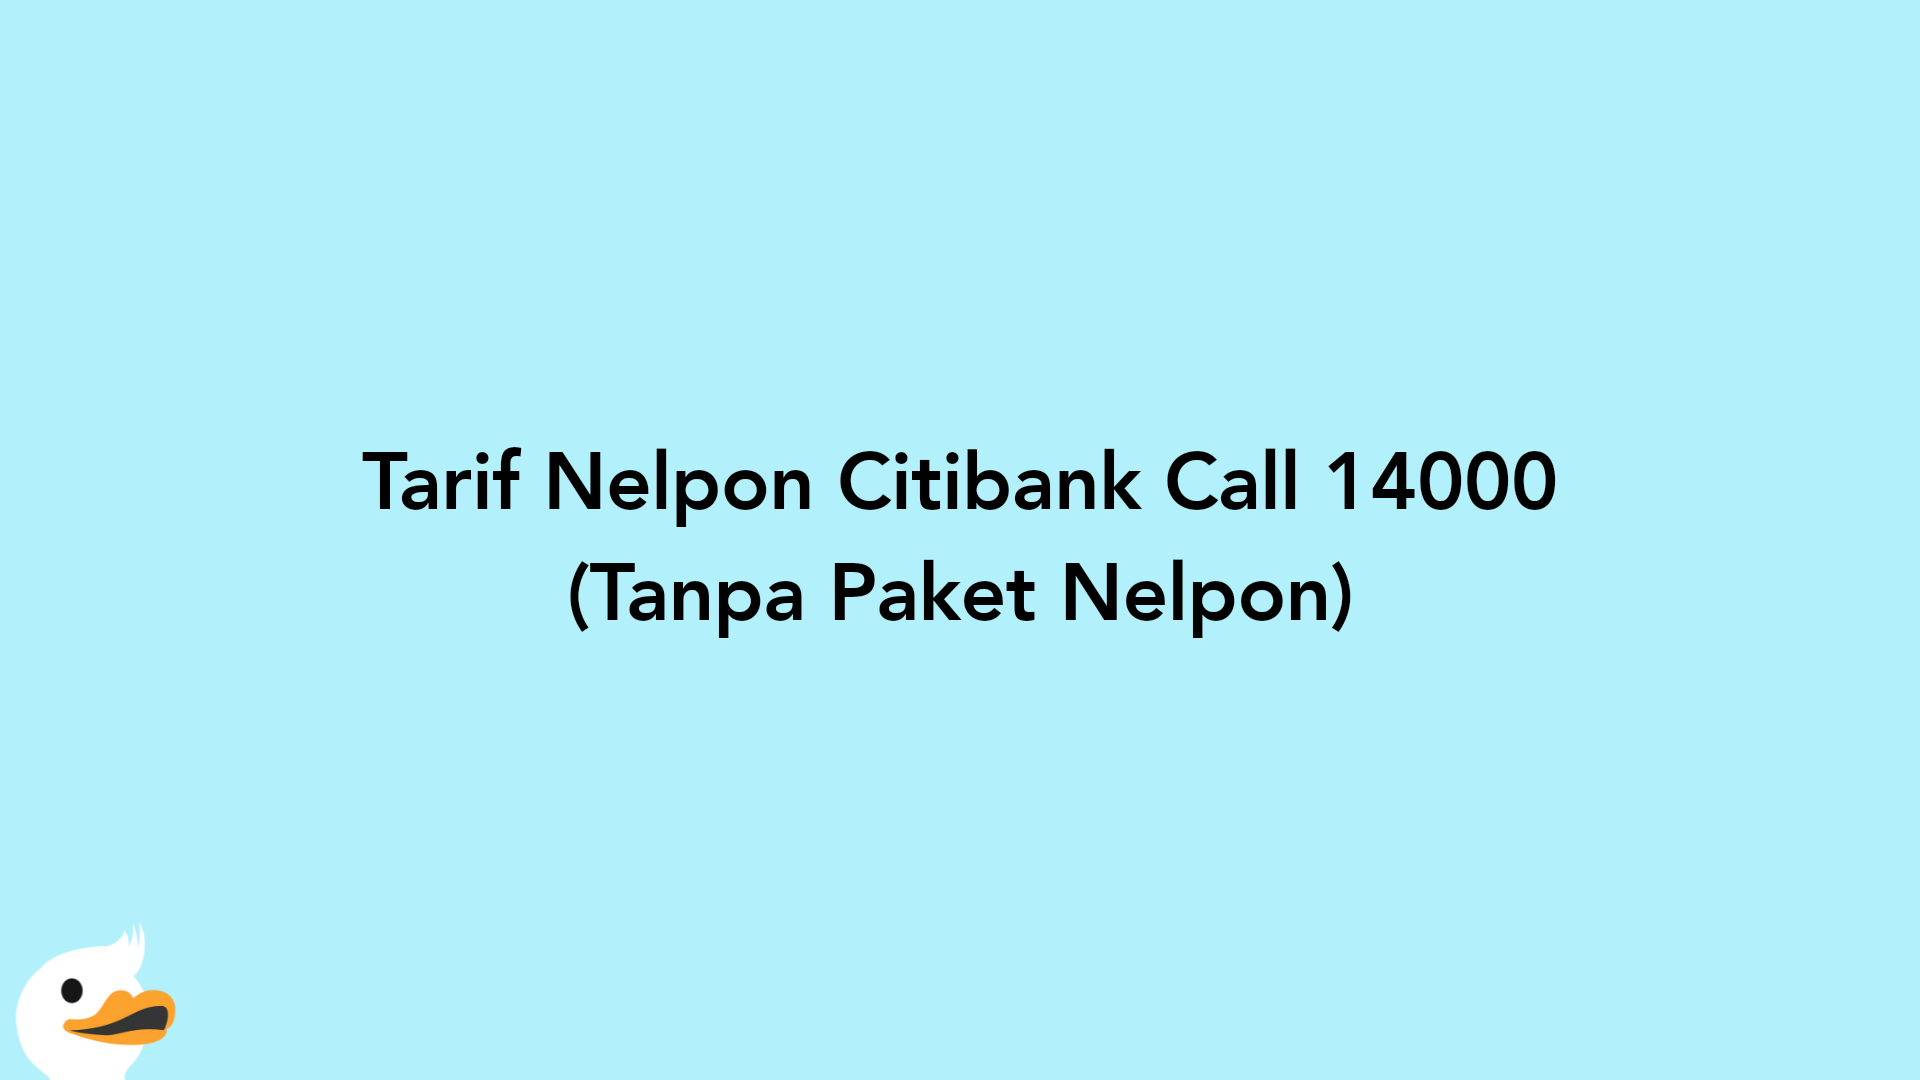 Tarif Nelpon Citibank Call 14000 (Tanpa Paket Nelpon)